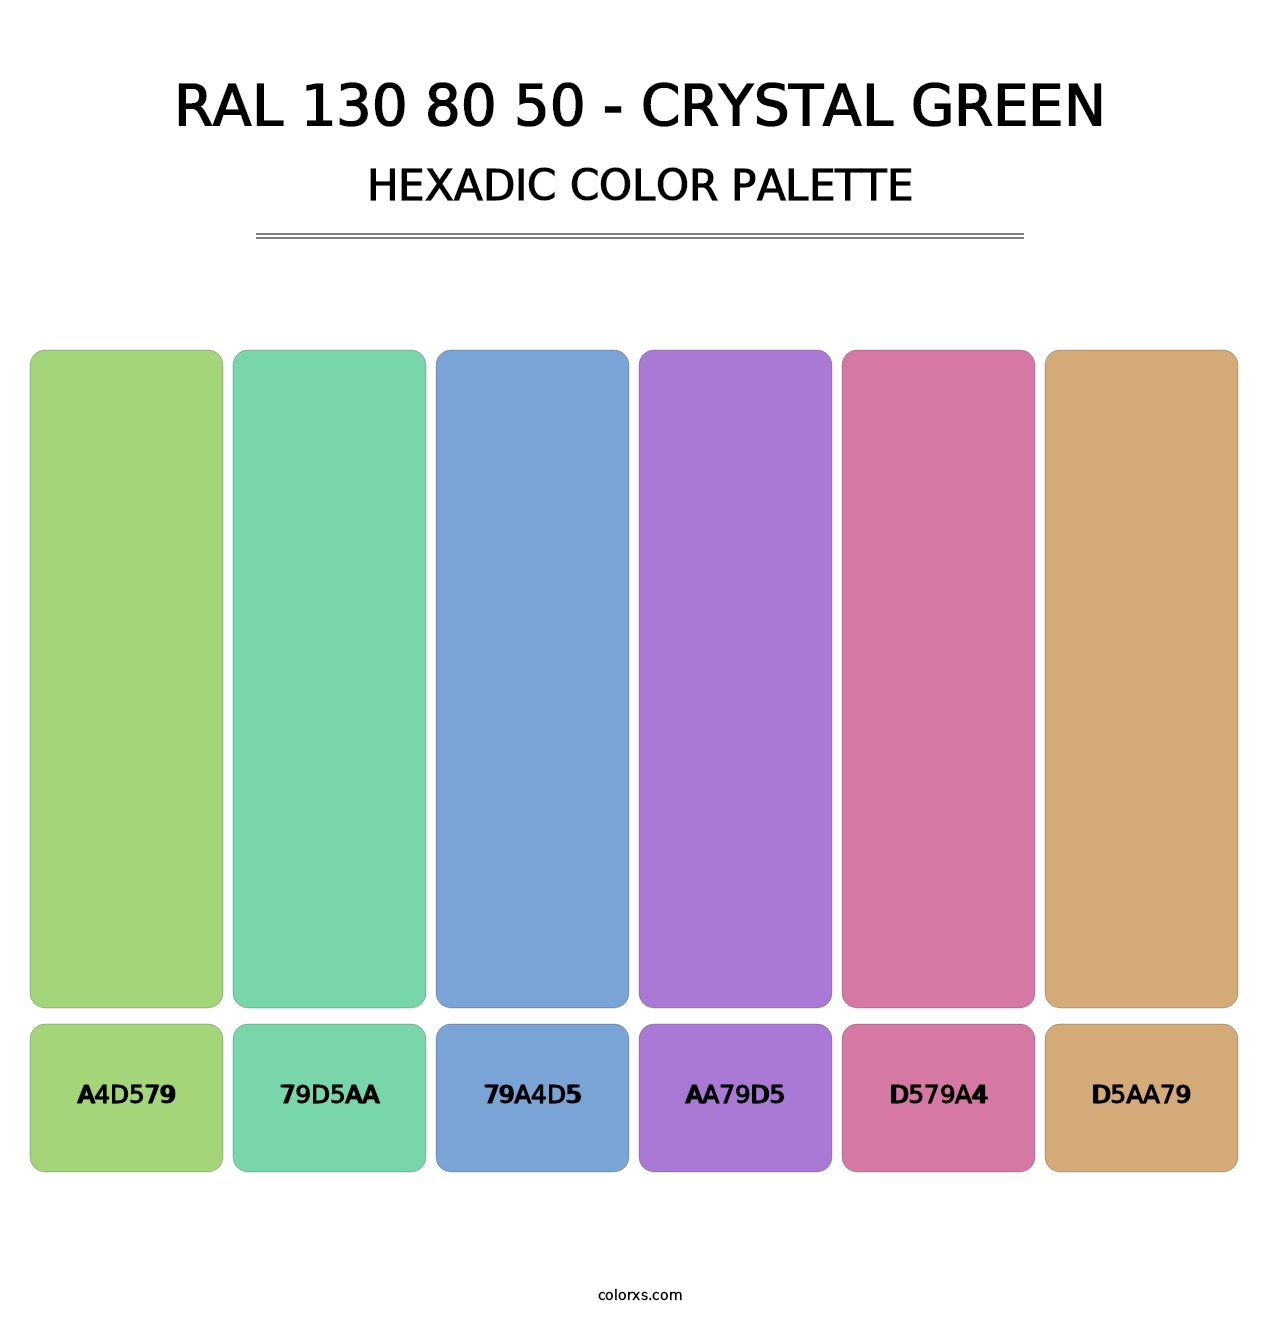 RAL 130 80 50 - Crystal Green - Hexadic Color Palette